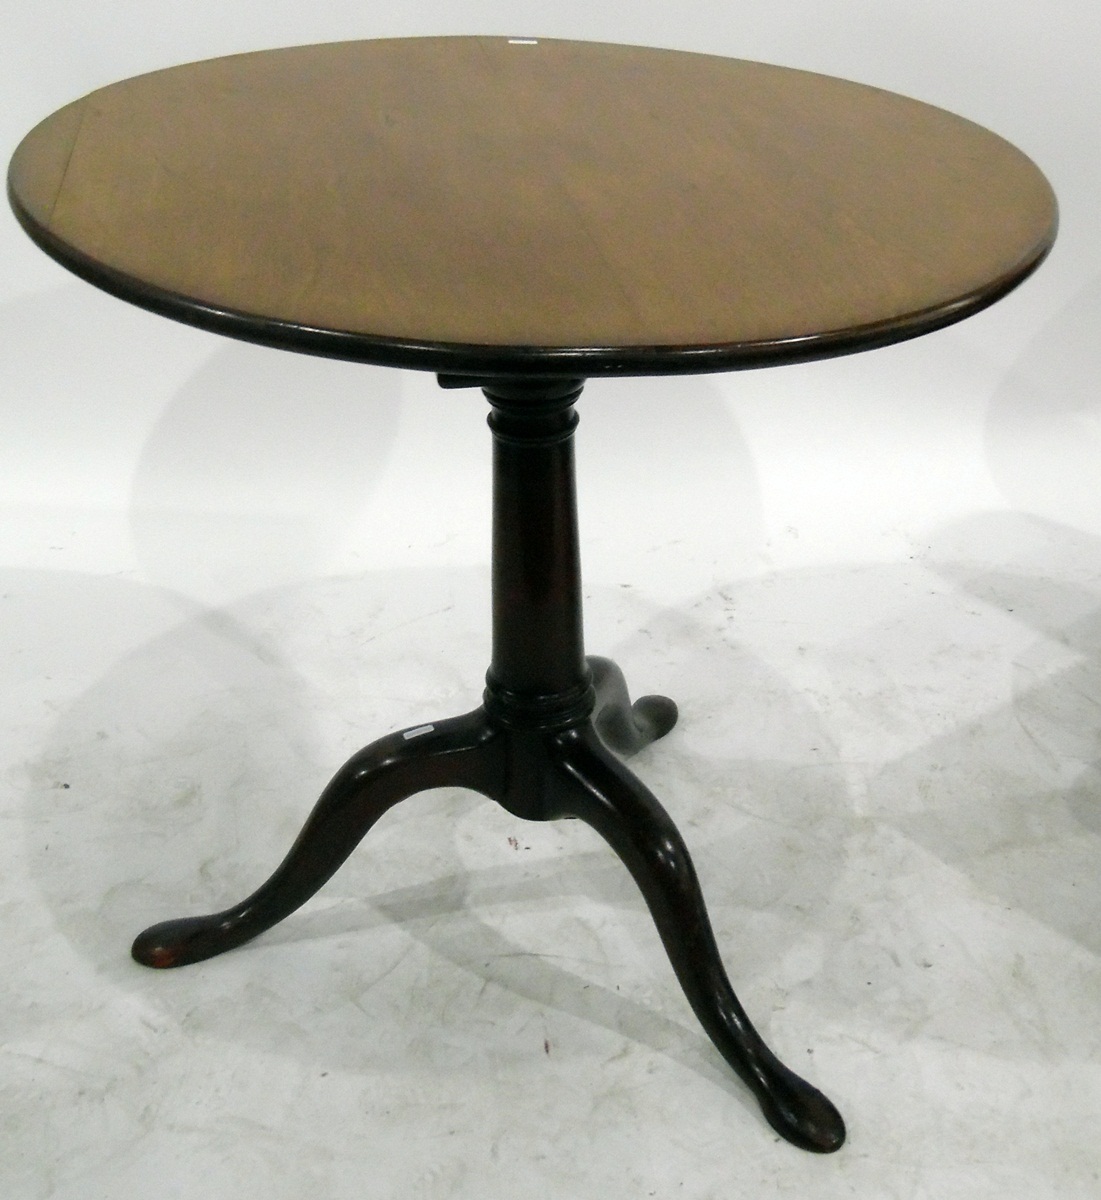 19th century mahogany circular tripod table, 75.